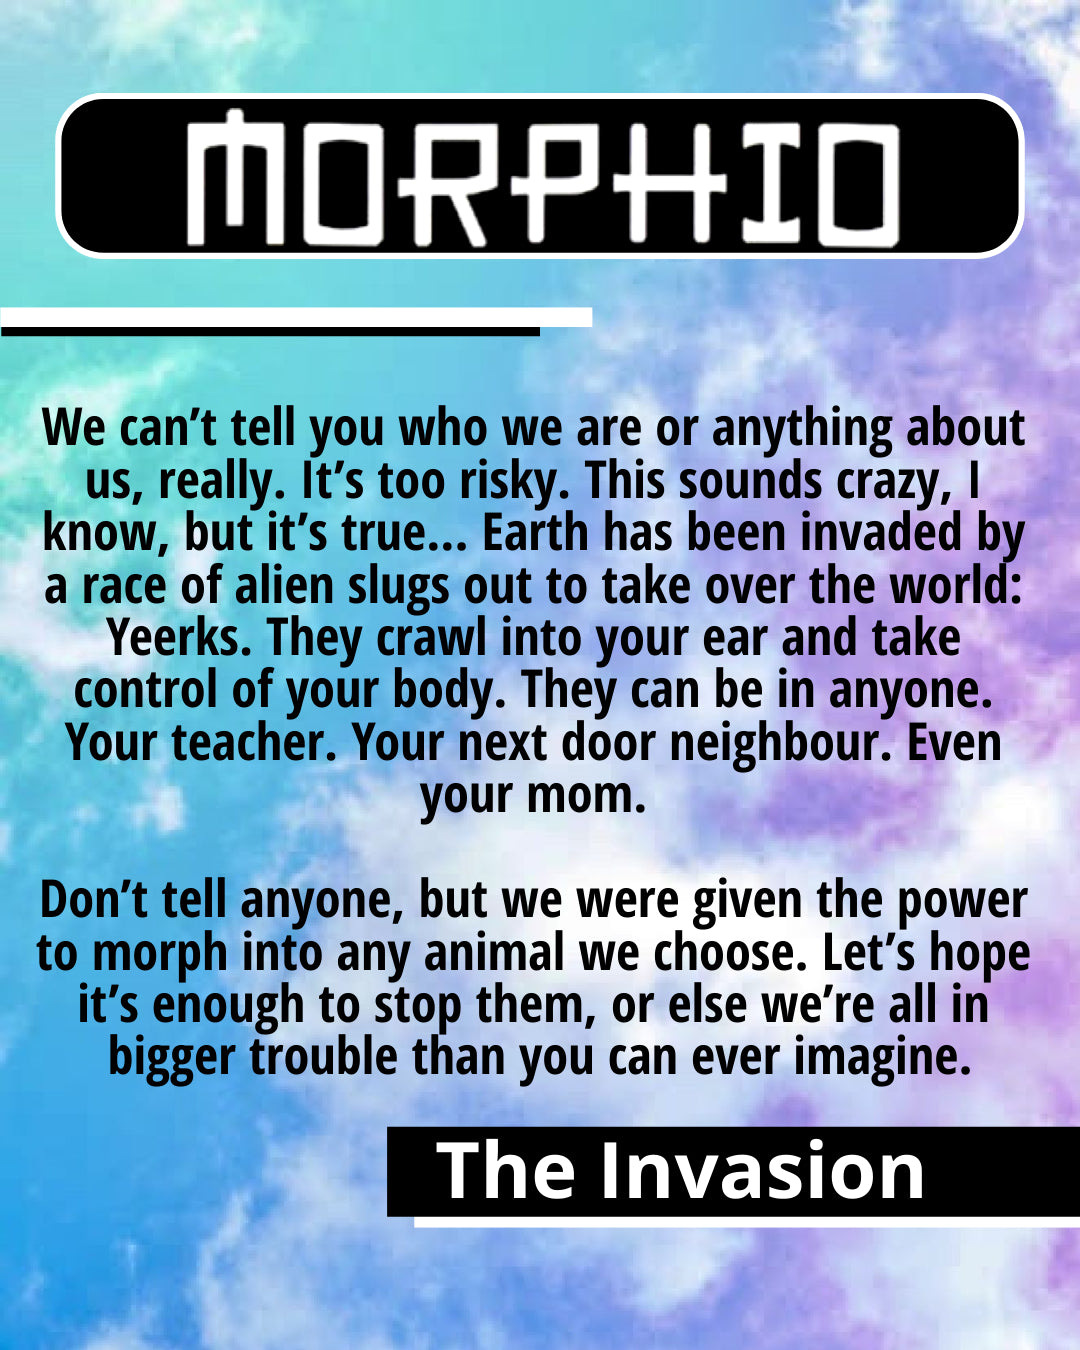 MORPHIO: The Invasion Necklace